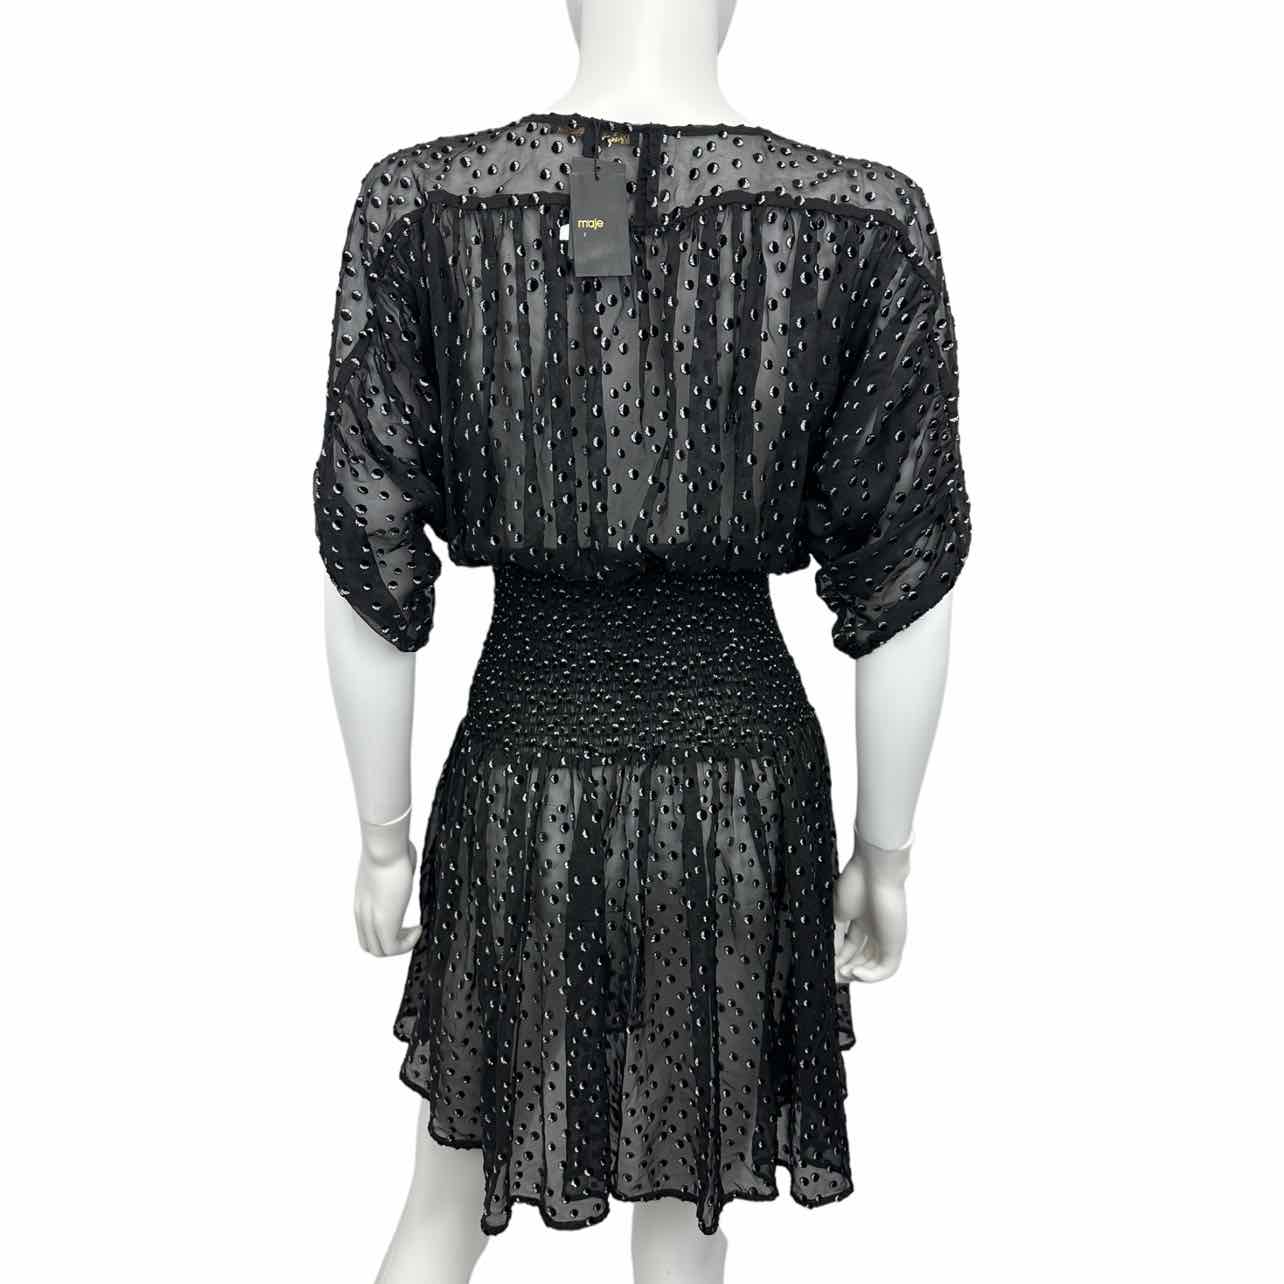 Maje Black Sheer Cocktail Dress Size 6